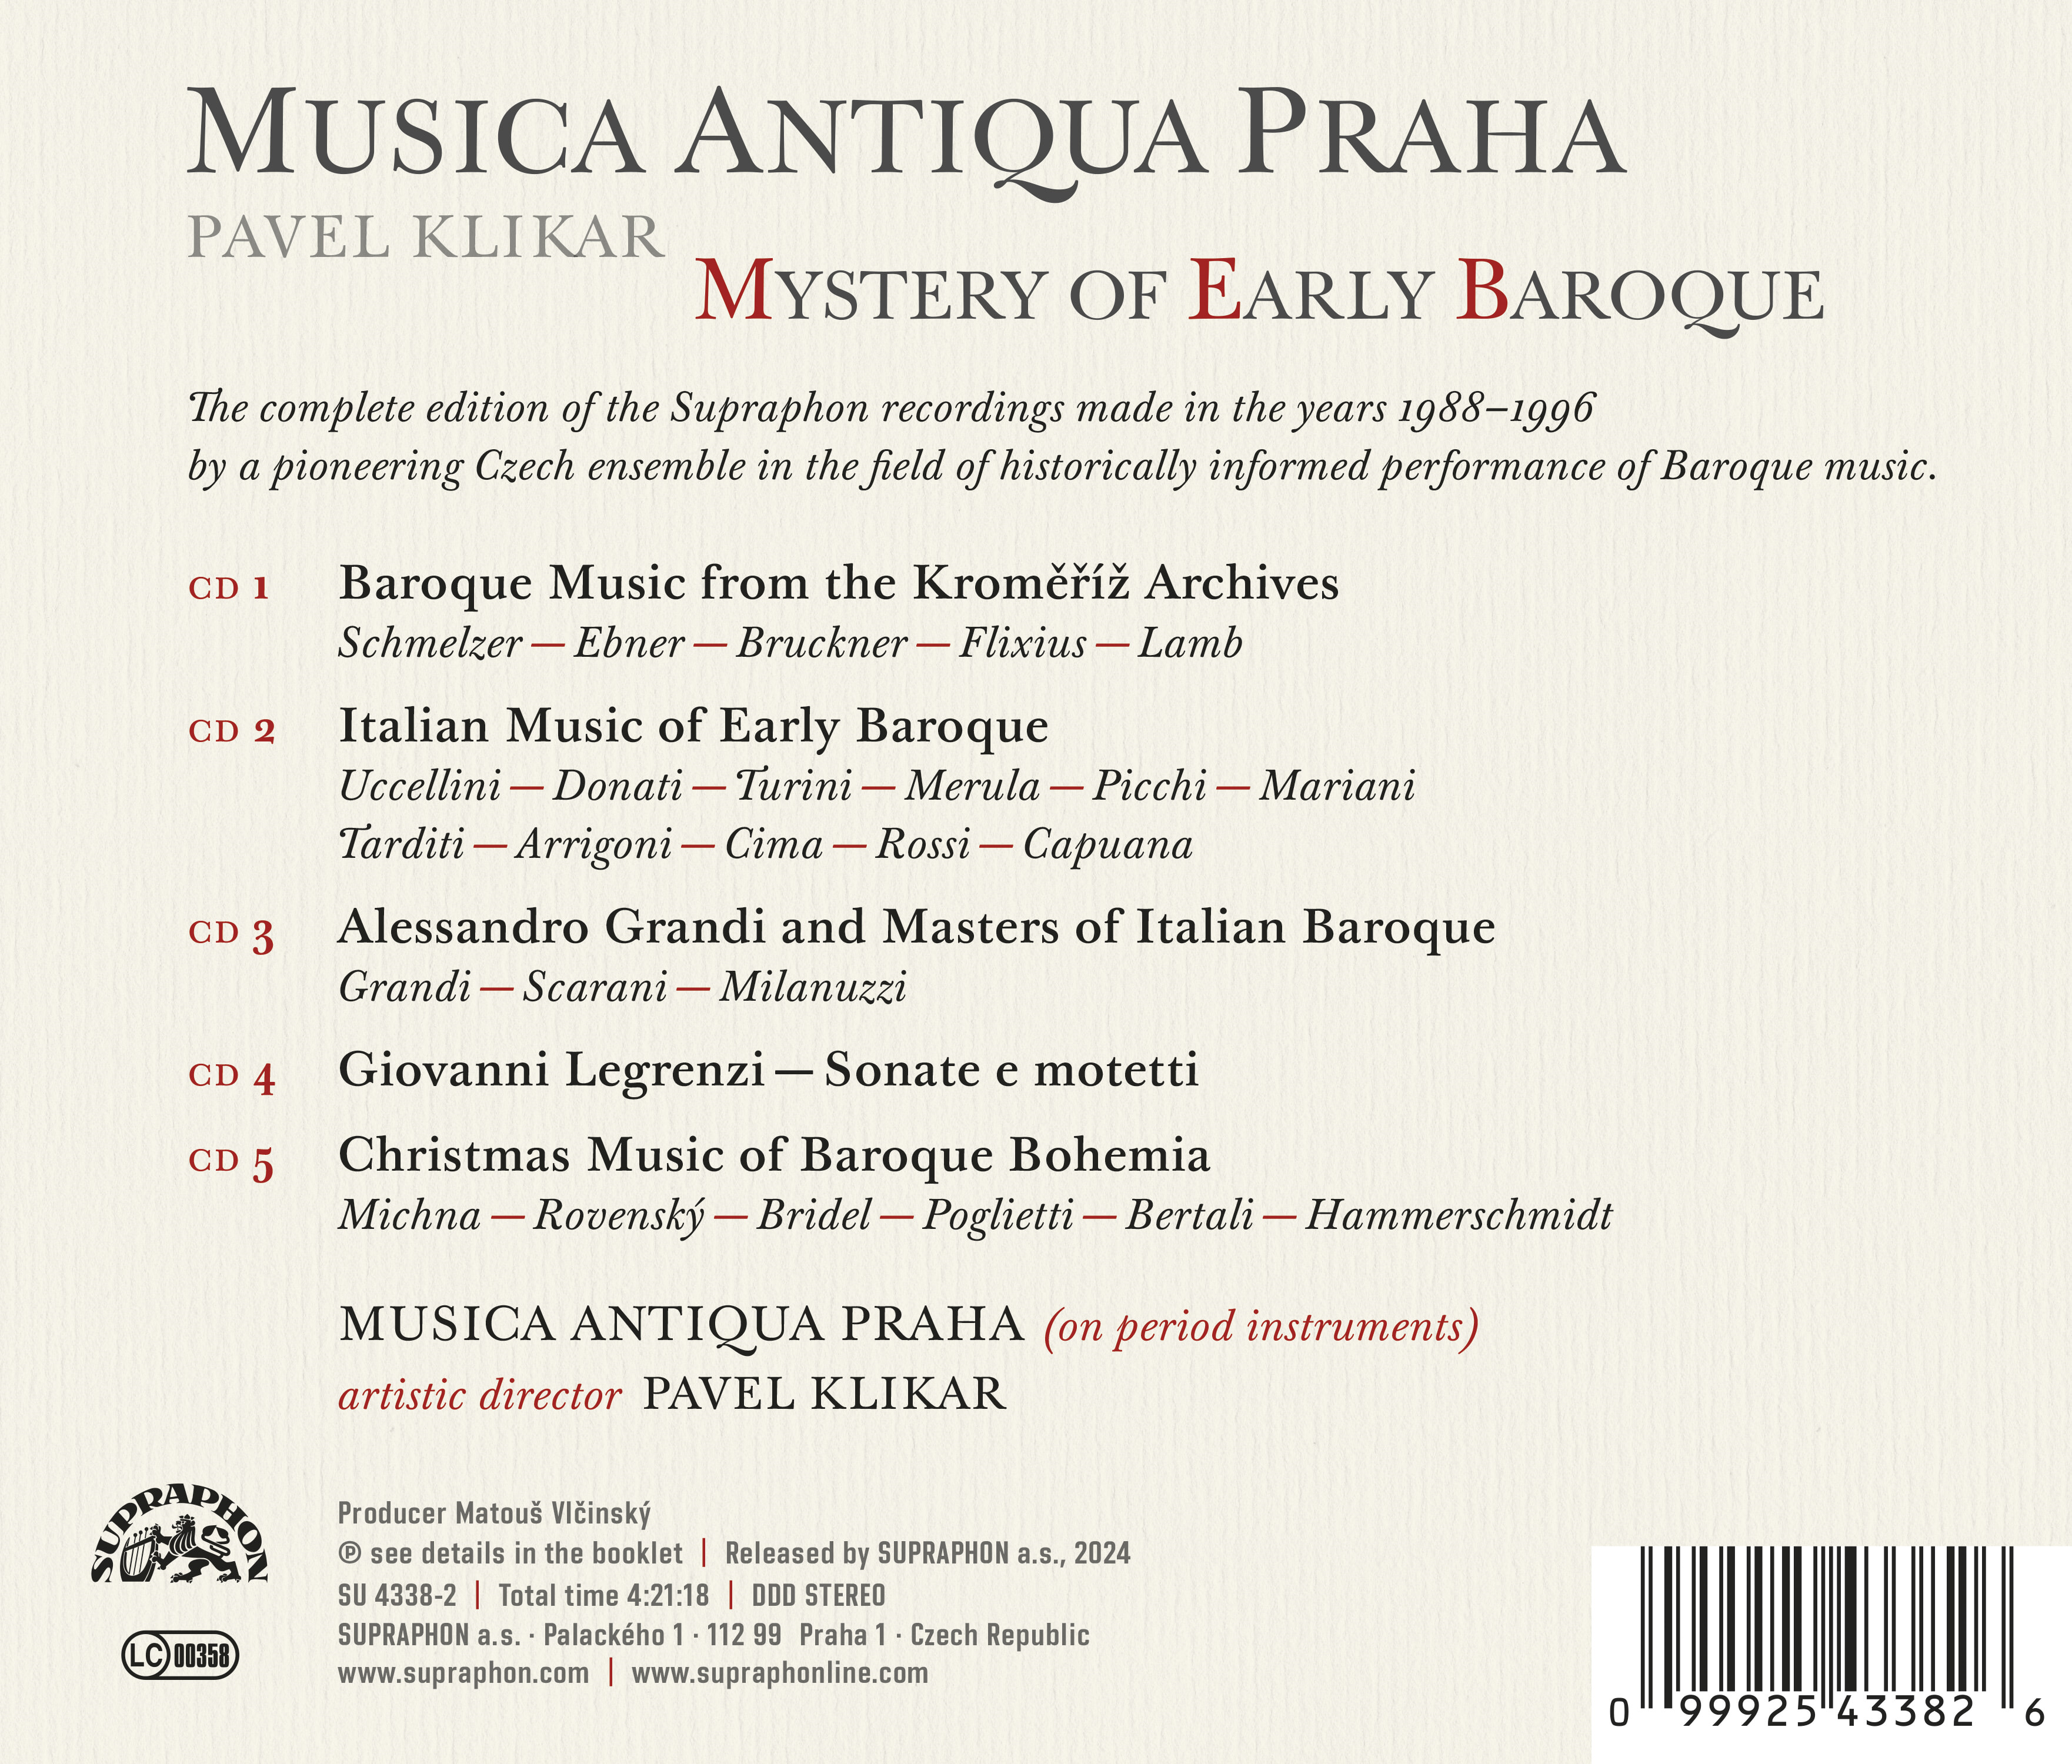 Pavel Klikar / Musica Antiqua Praha 초기 바로크 음악의 신비 (Mystery of Early Baroque)